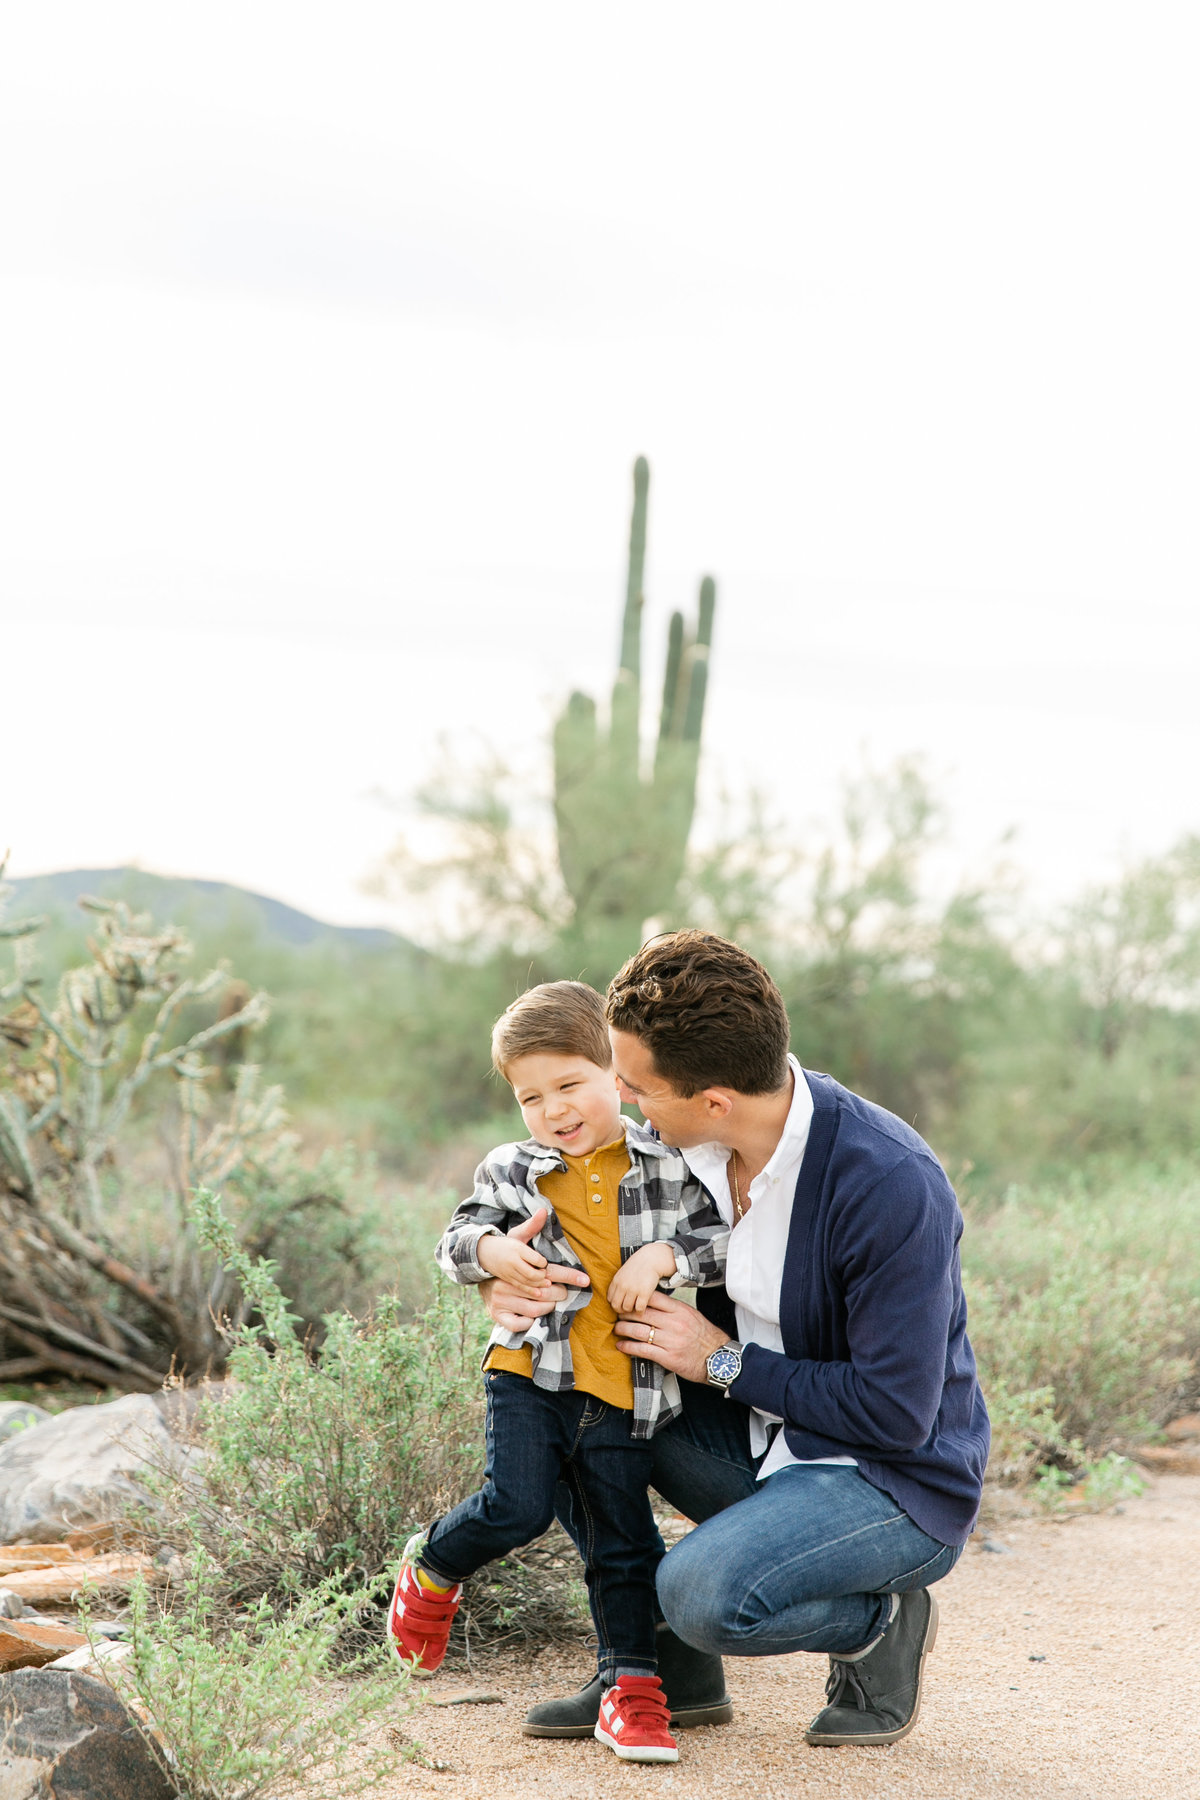 Karlie Colleen Photography - Scottsdale Arizona - Family portraits - Taylor & Family-56